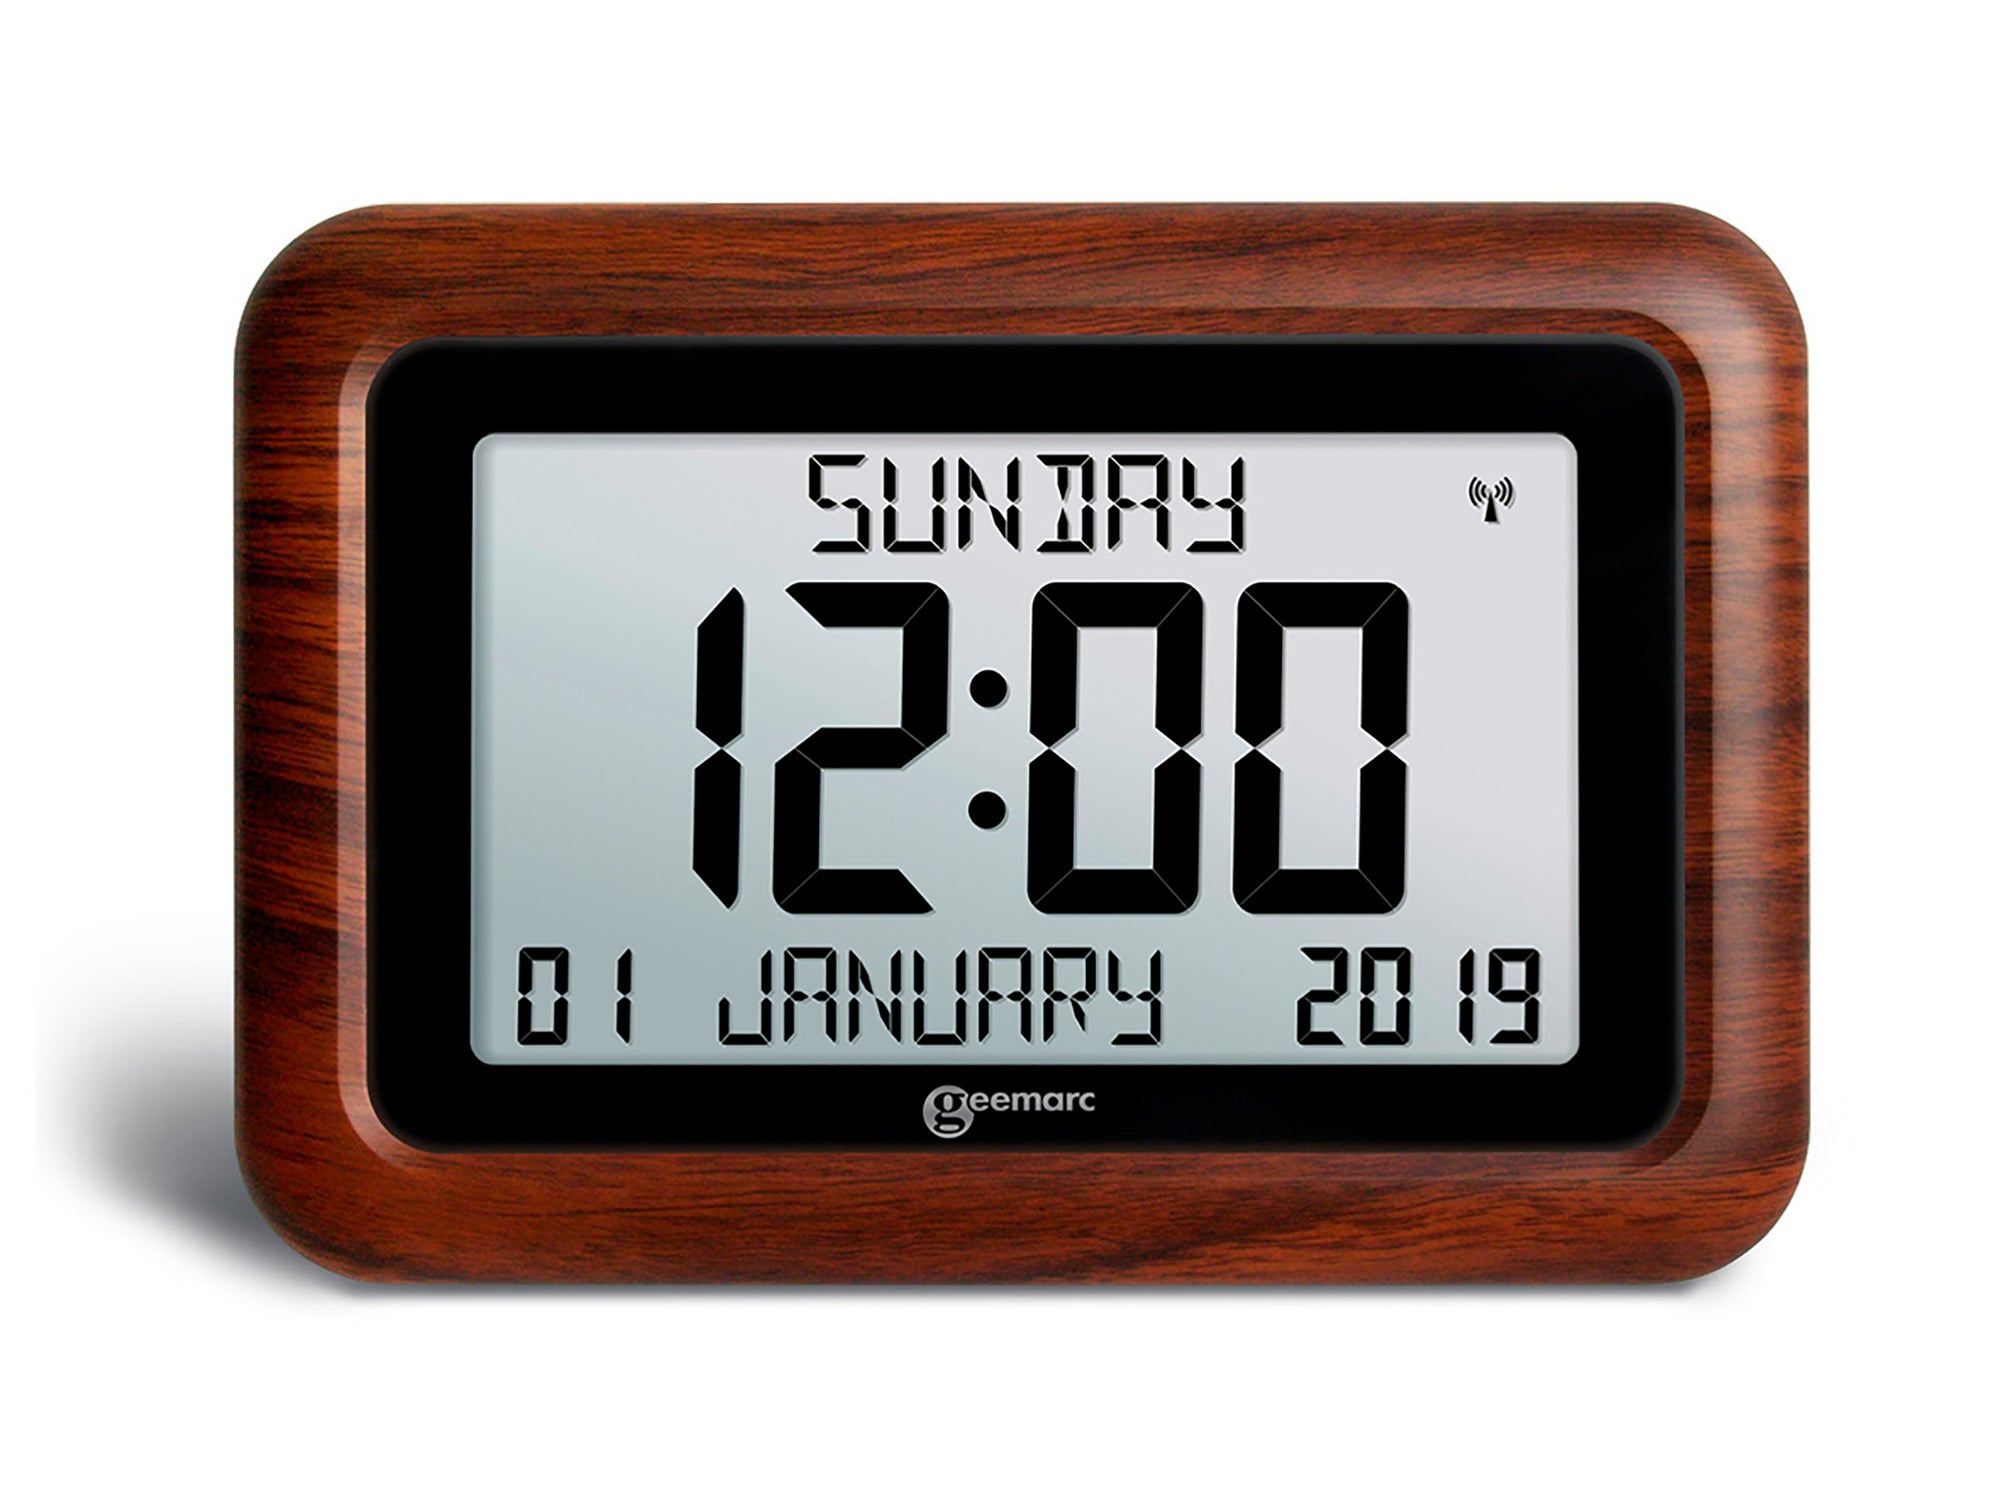 Radio controlled wood effect clock